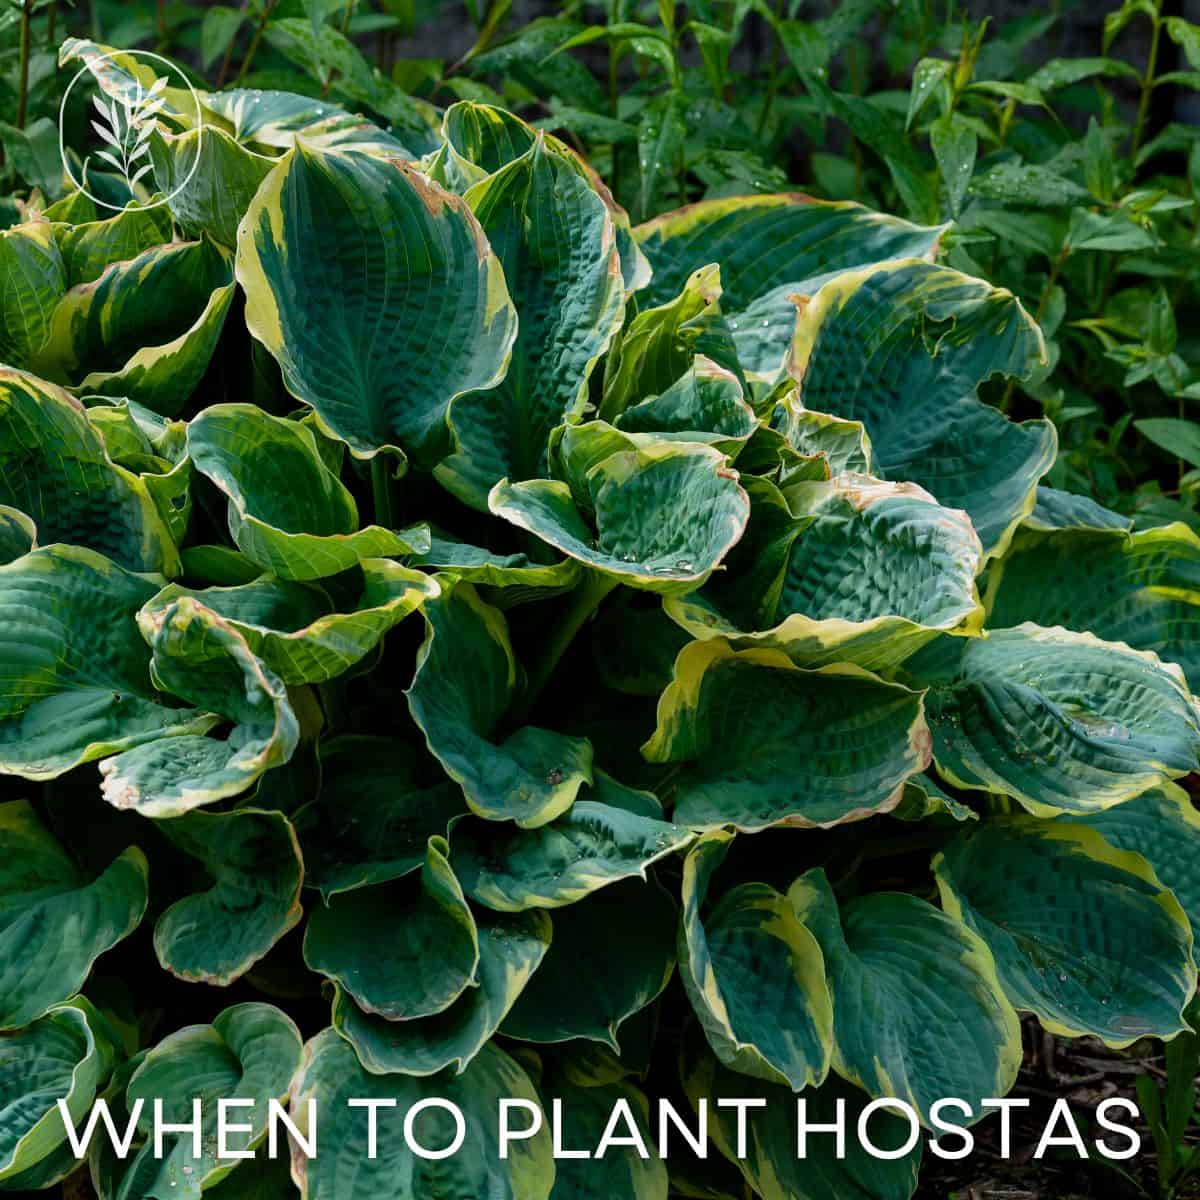 When to plant hostas via @home4theharvest